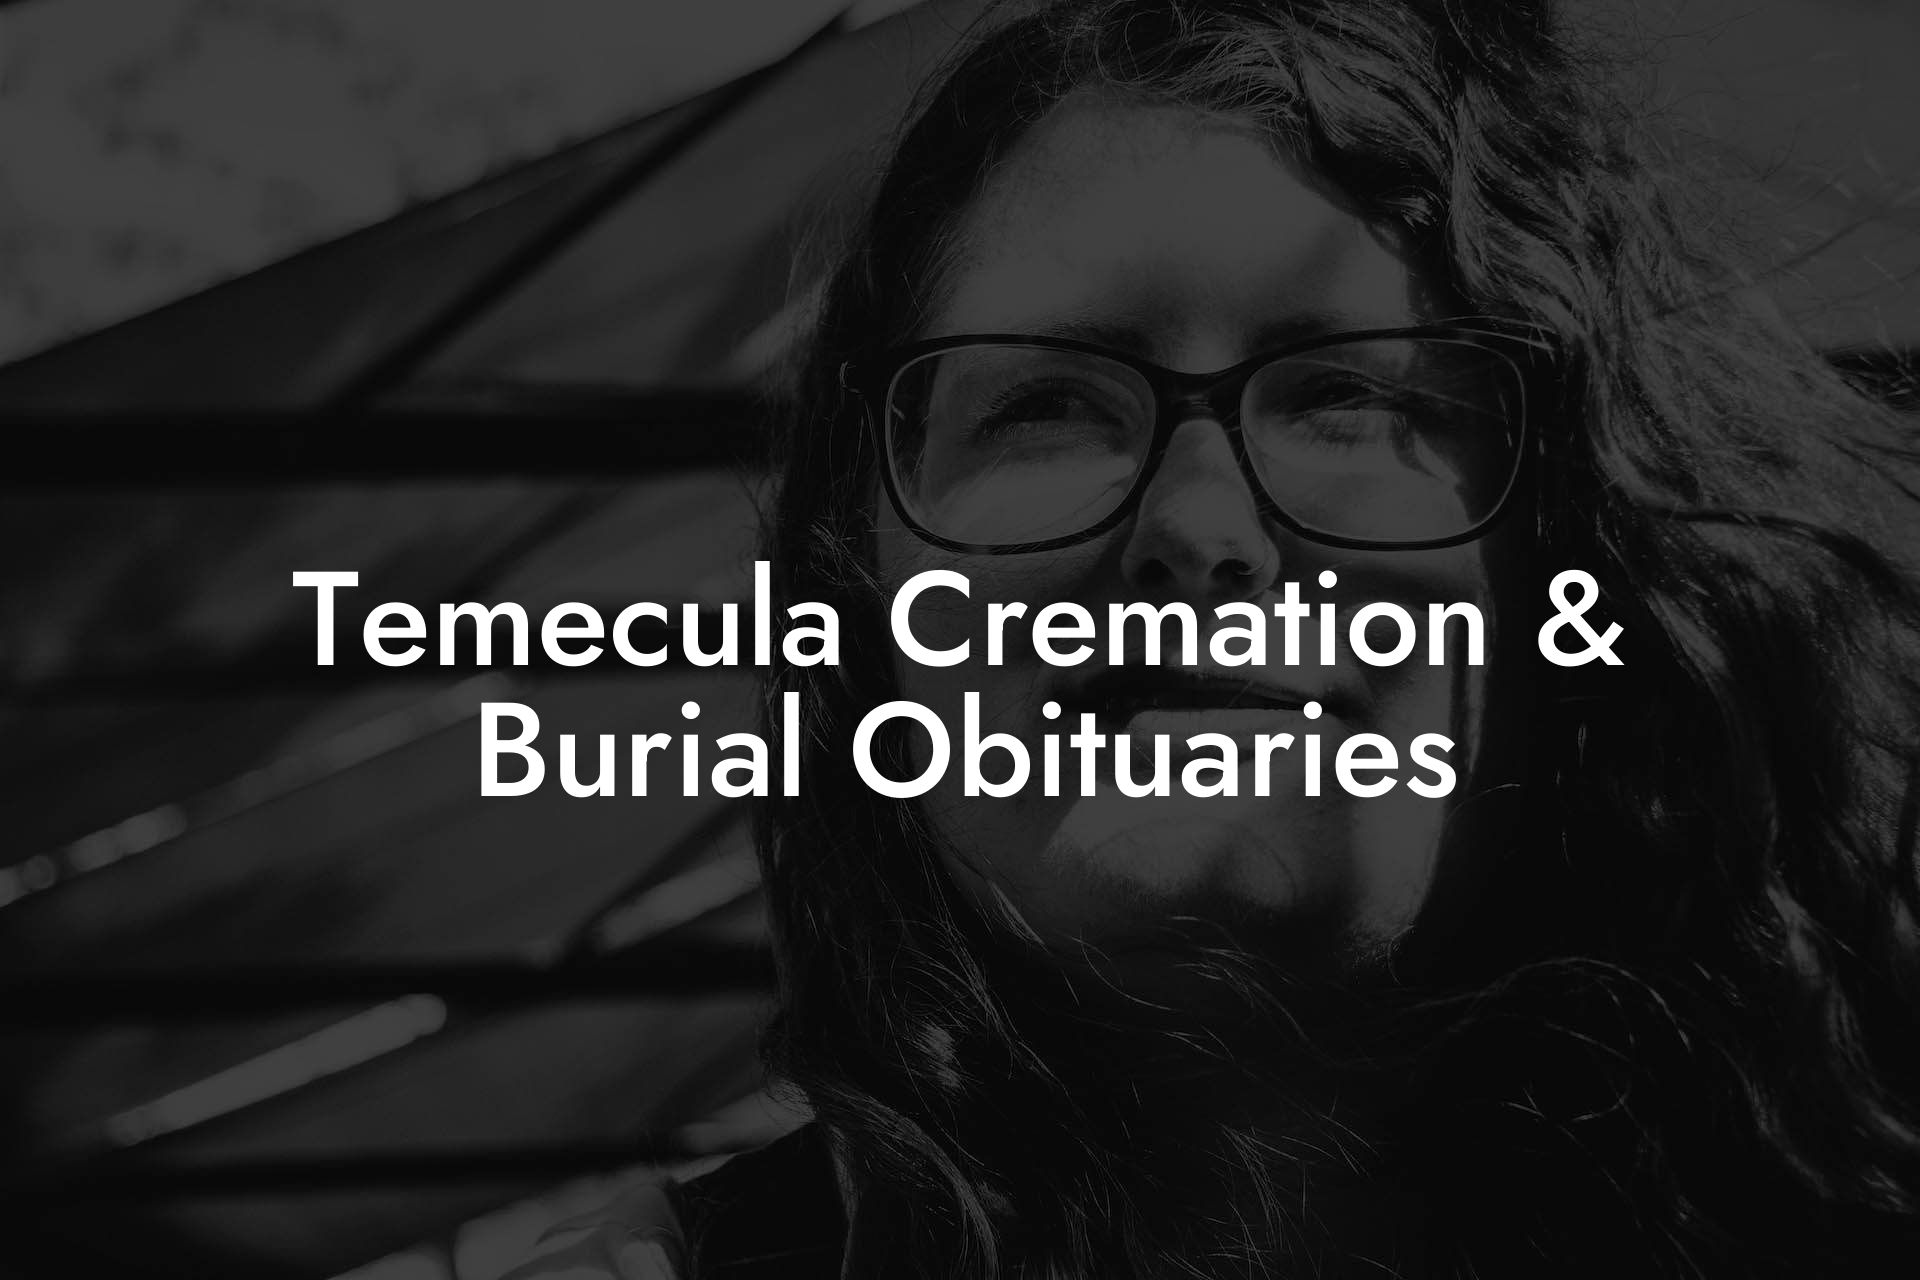 Temecula Cremation & Burial Obituaries